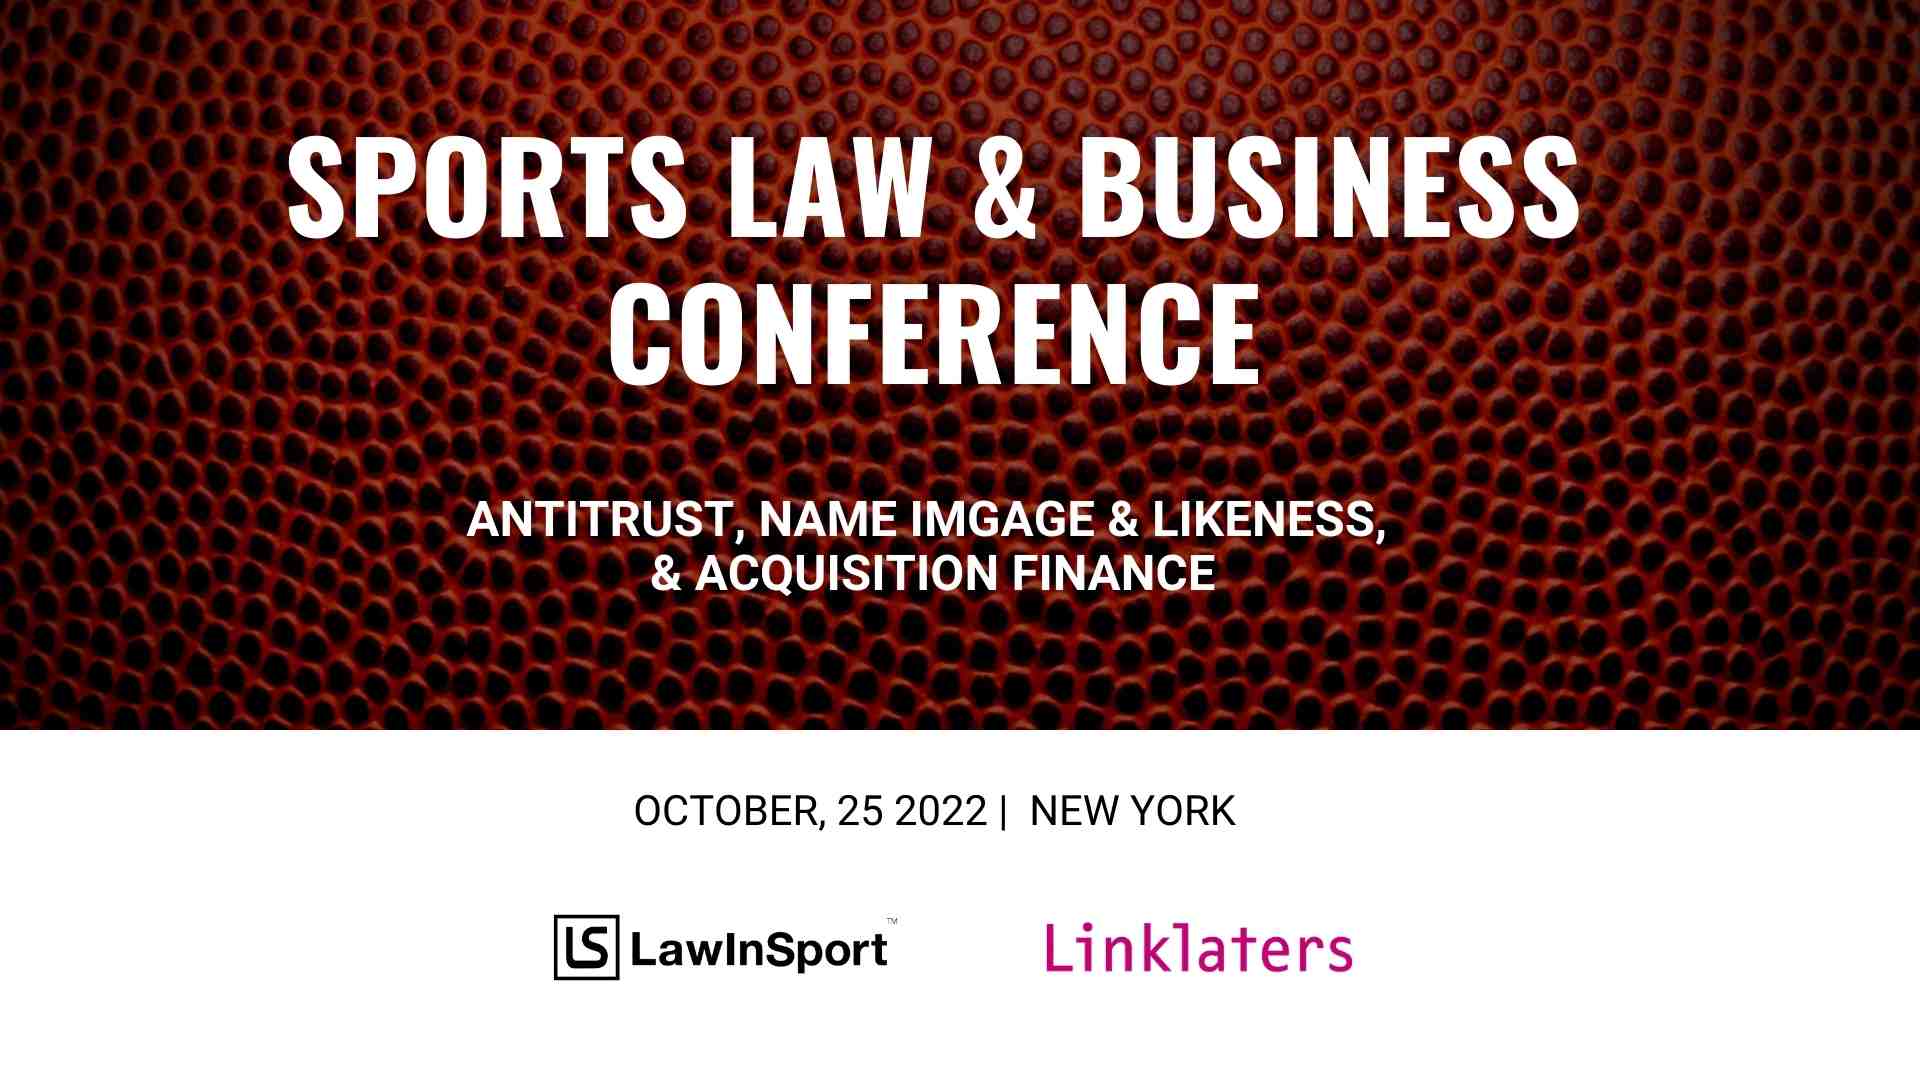 linklaters lawinsport conference